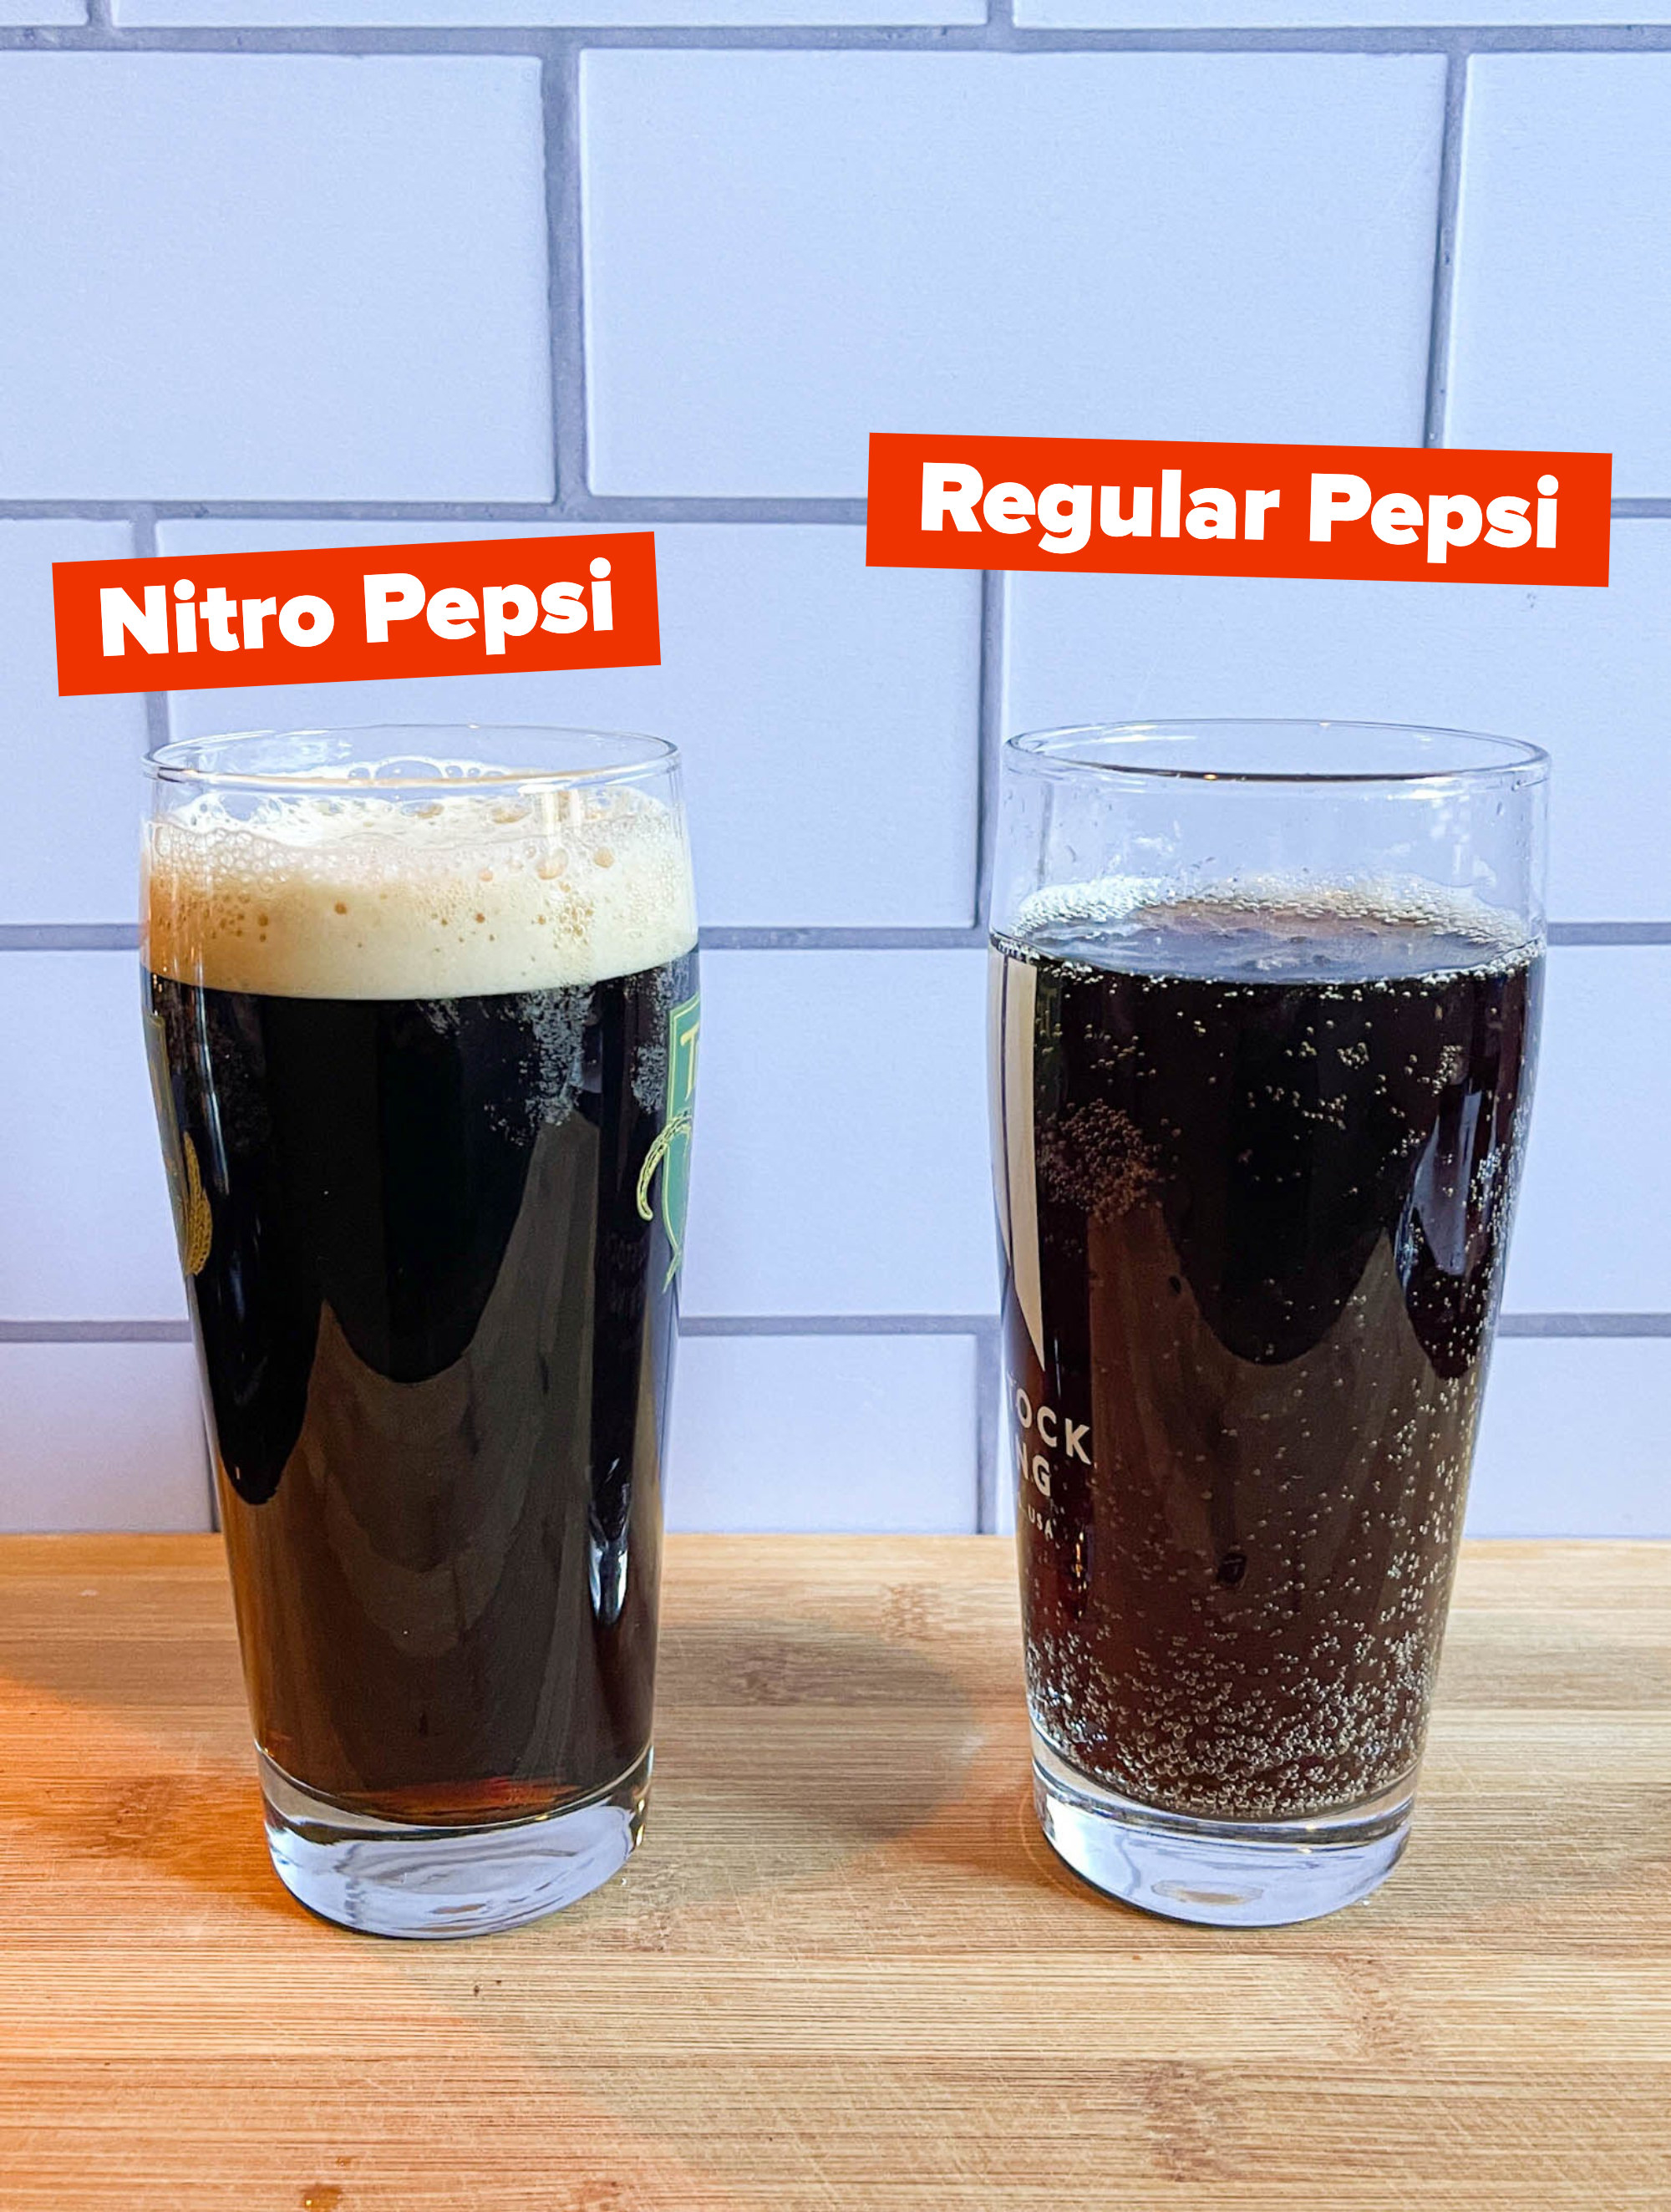 Nitro Pepsi next to regular Pepsi, both in pint glasses